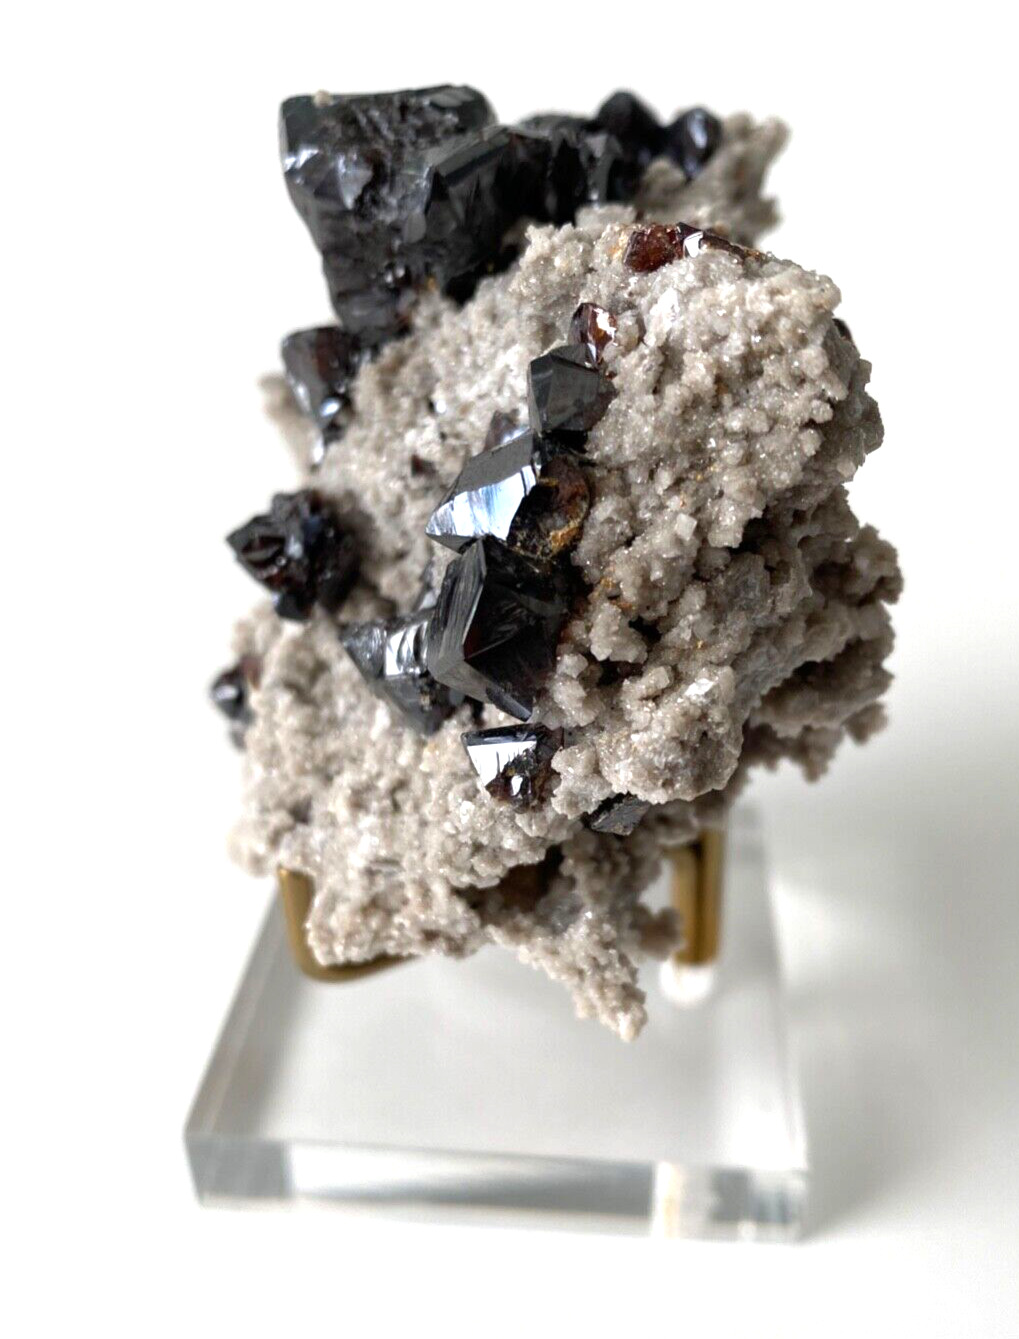 Lustrous Sphalerite Crystals on Dolomite Matrix from Elmwood